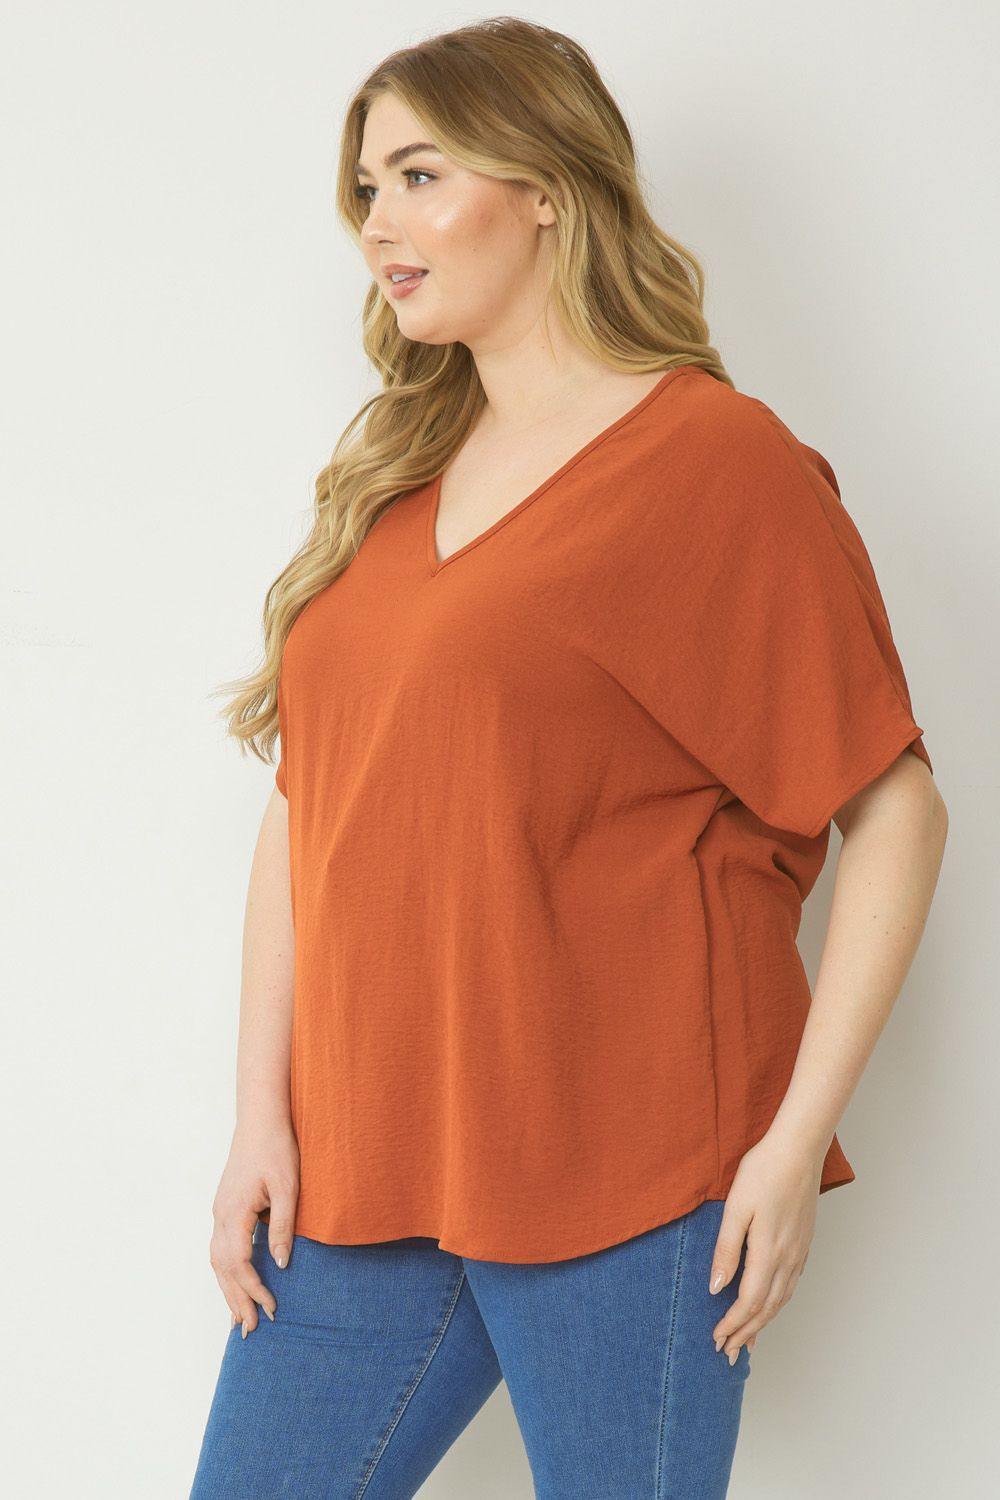 Plus size v neck oversized top houston texas boutique online orange